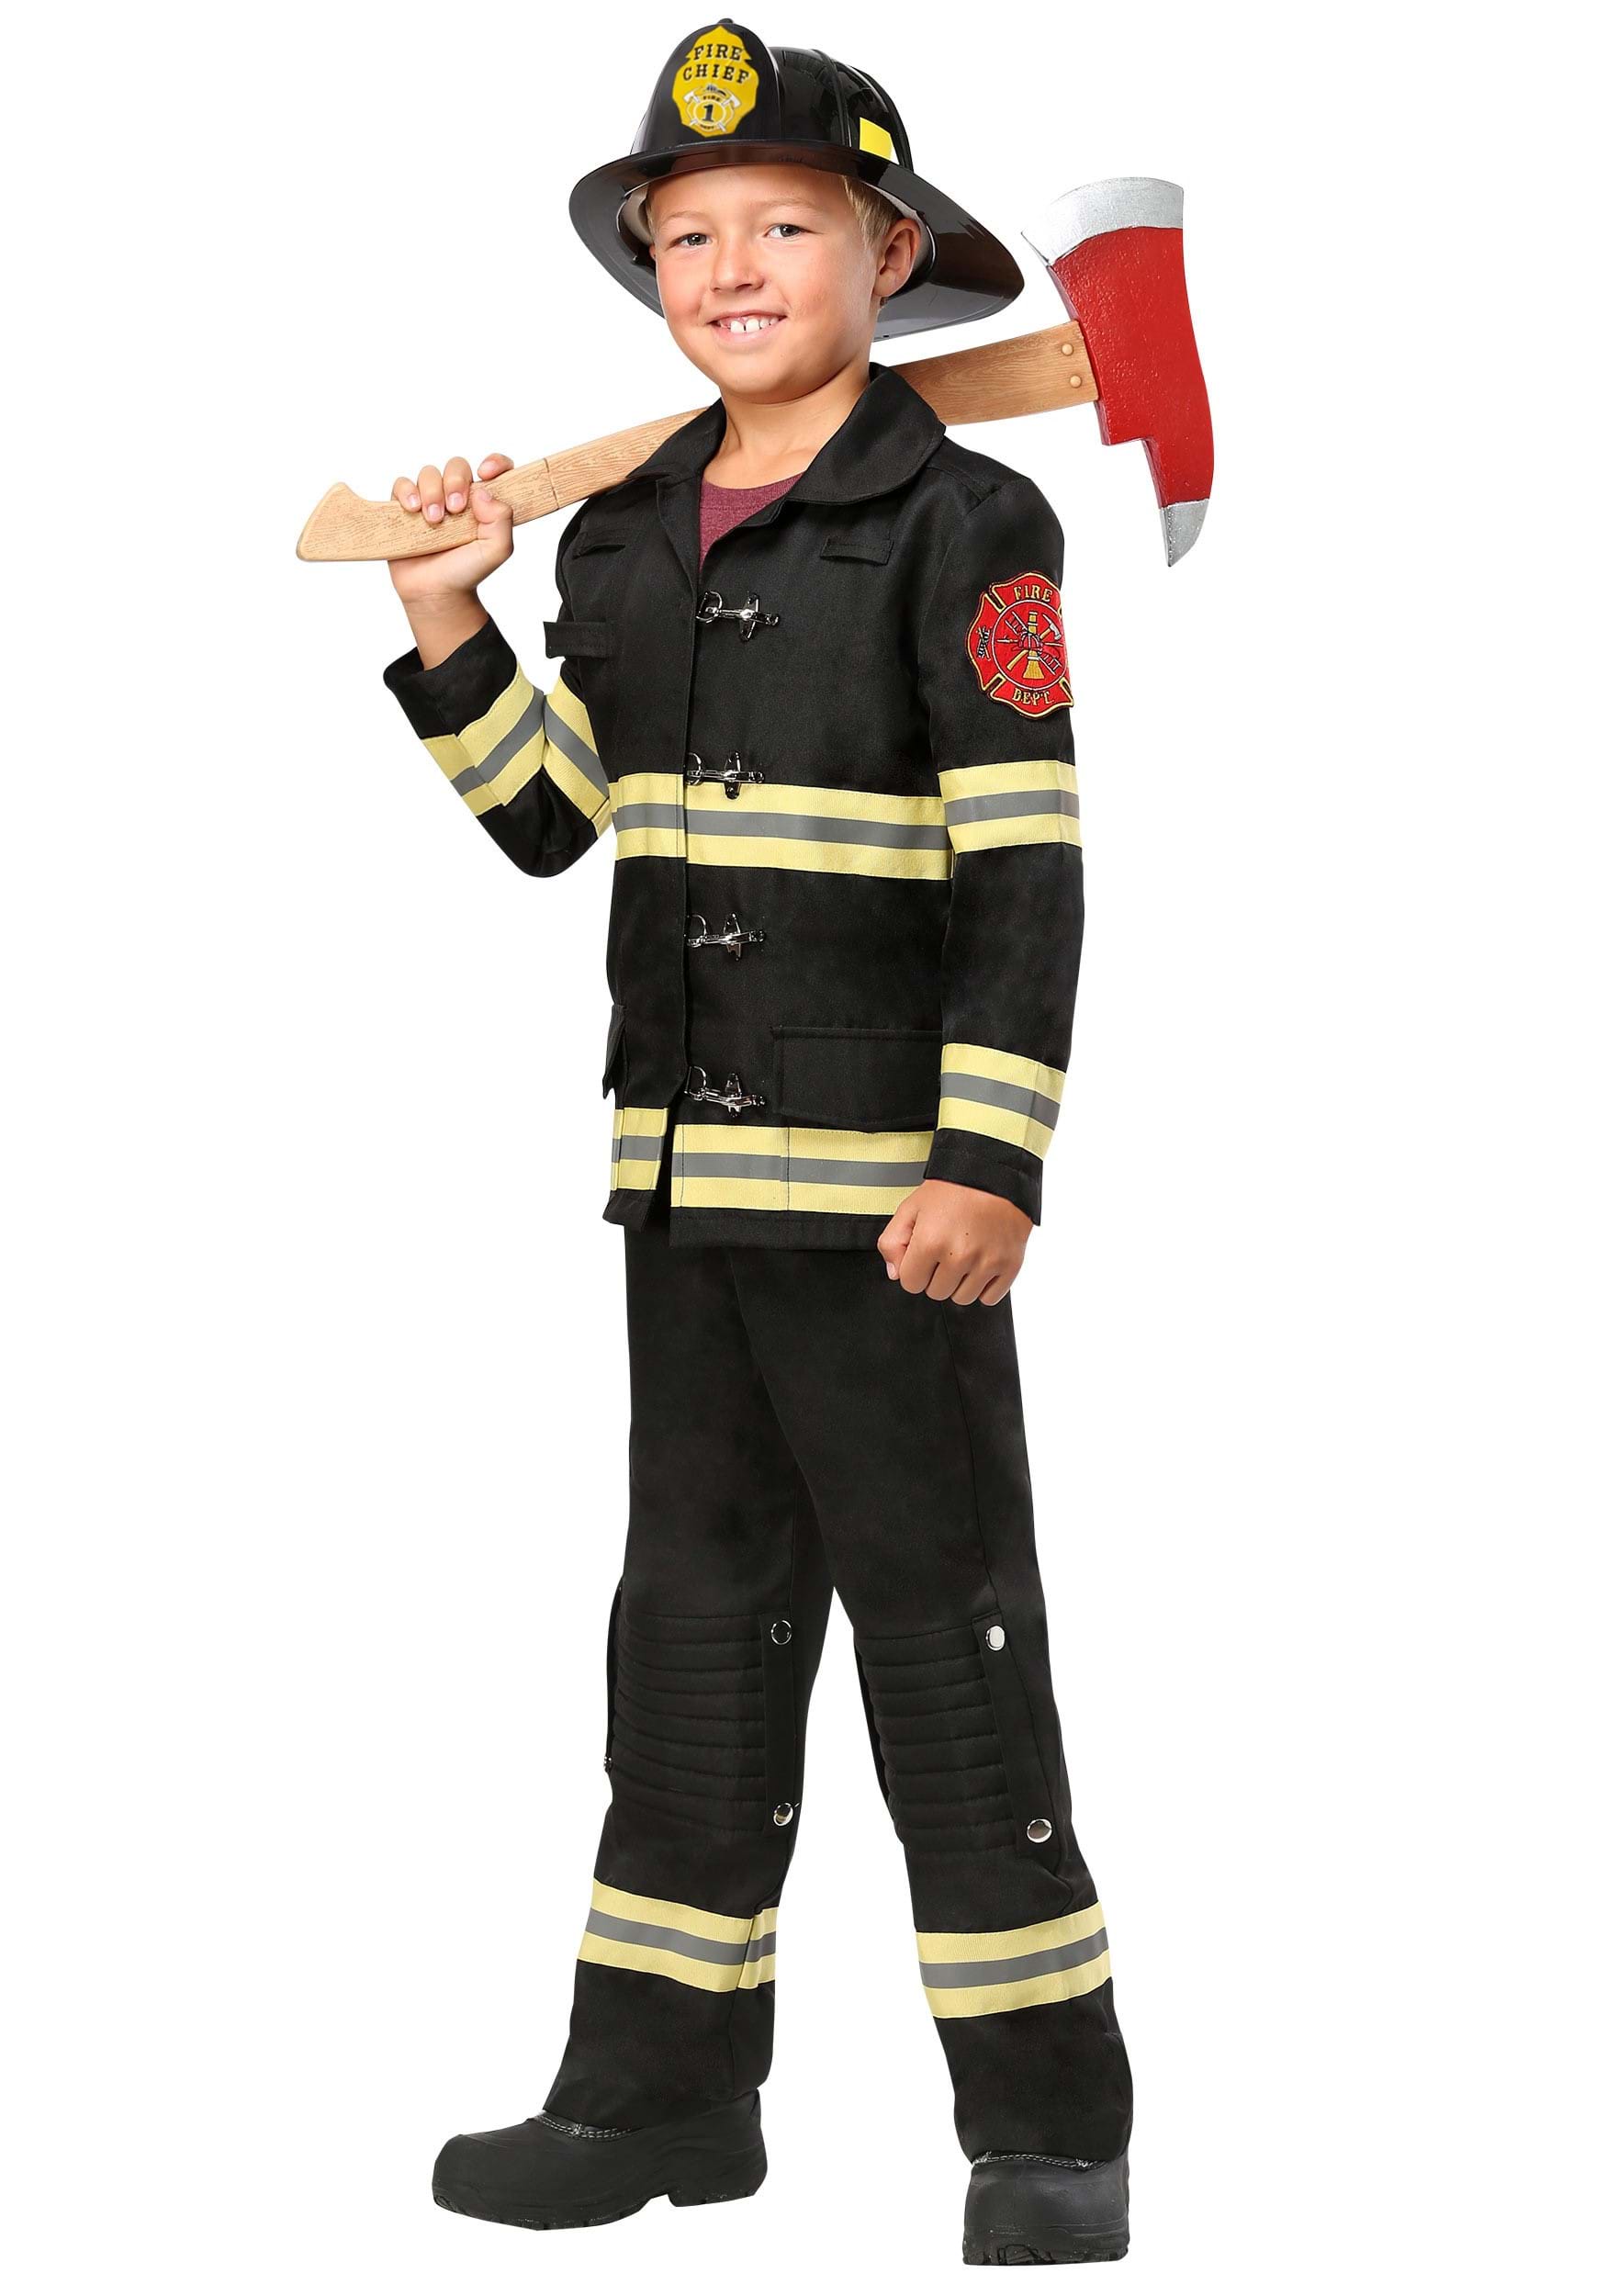 Disfraz de bombero